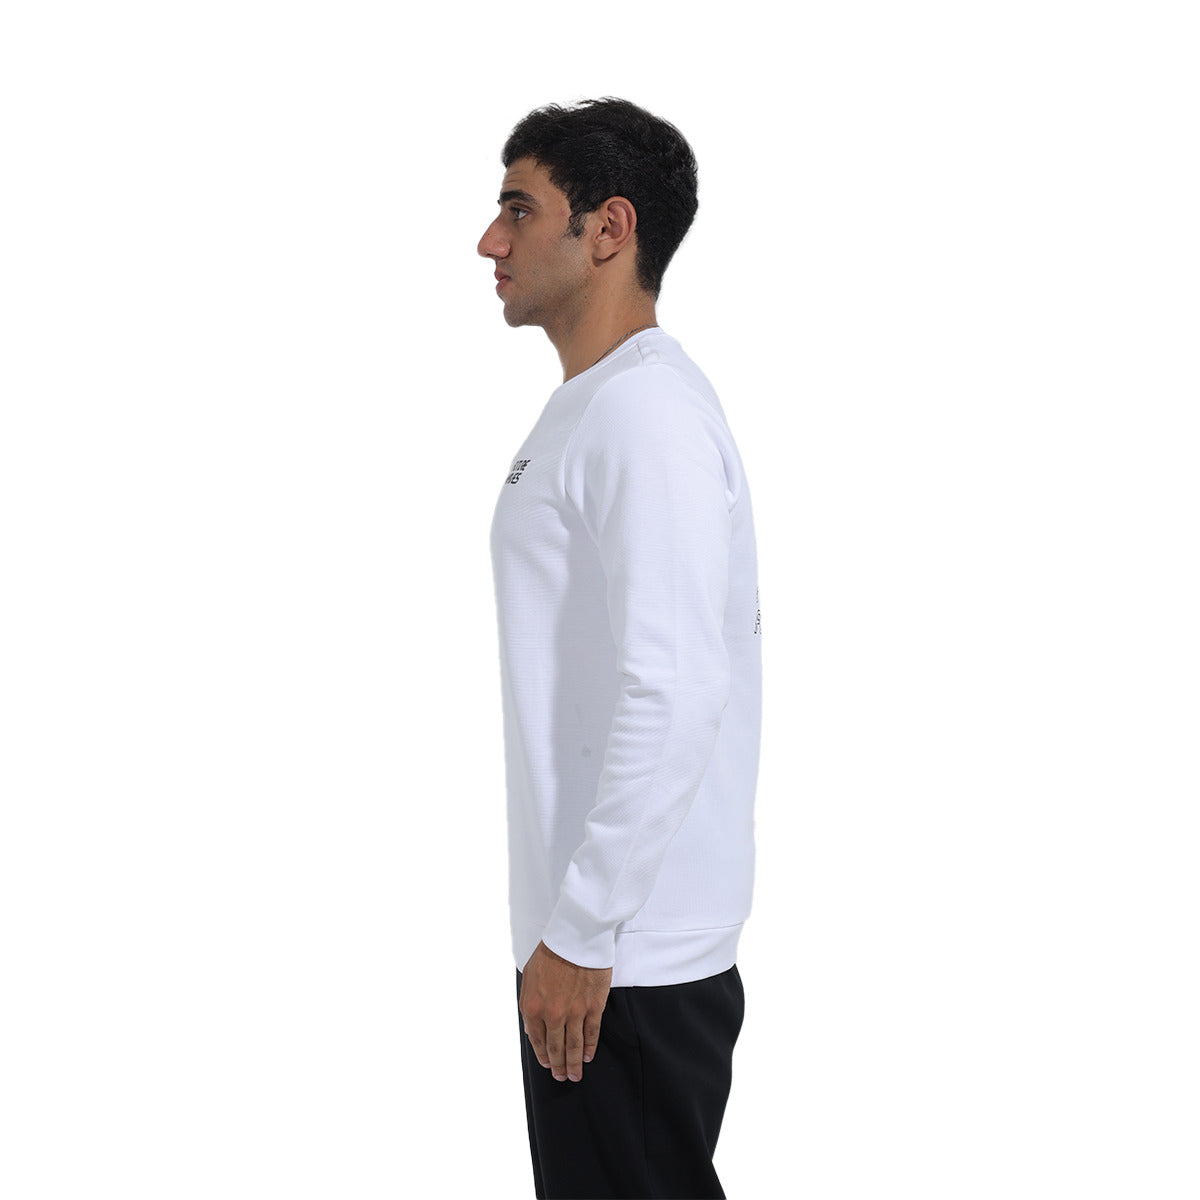 Anta Round Sweatshirt For Men, White